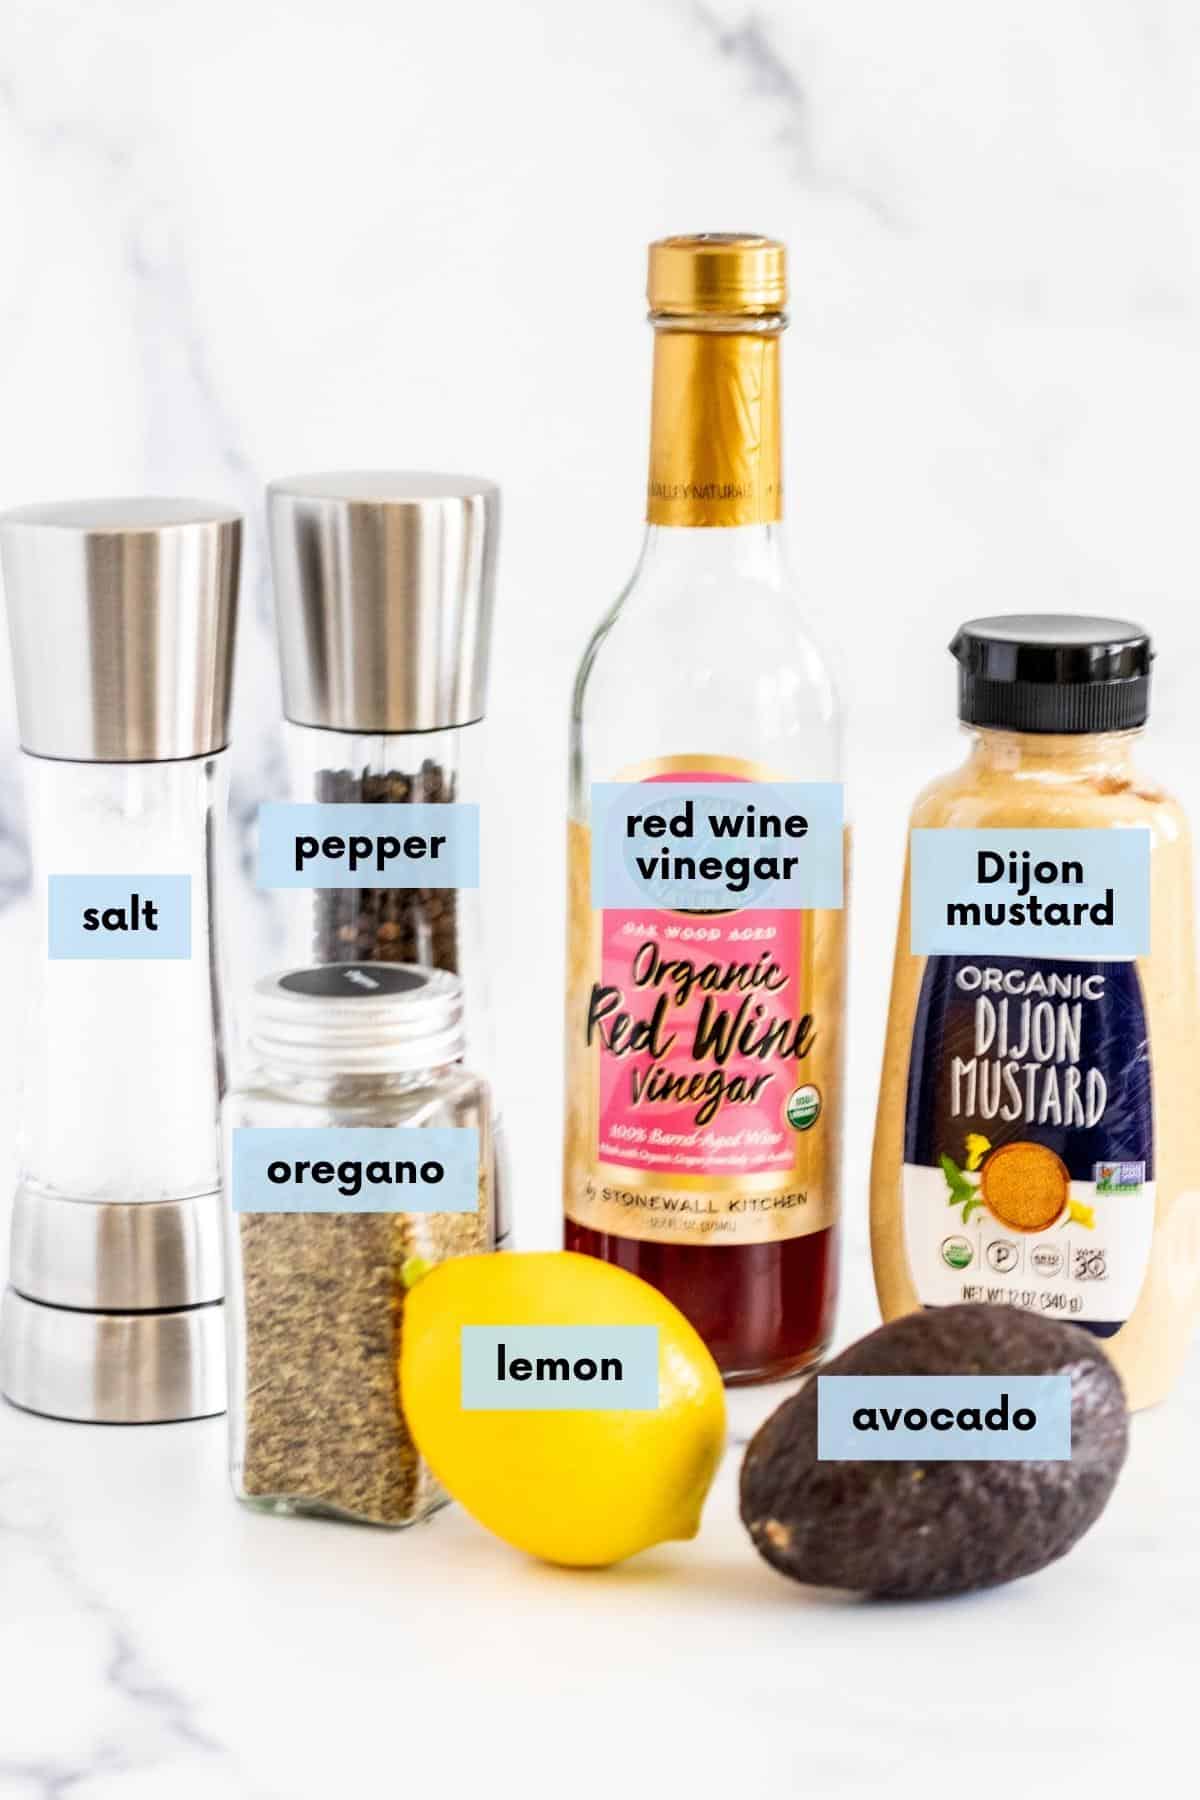 Salt and pepper shakers, jar of dried oregano, bottle of red wine vinegar, bottle of Dijon mustard, a lemon, and an avocado.